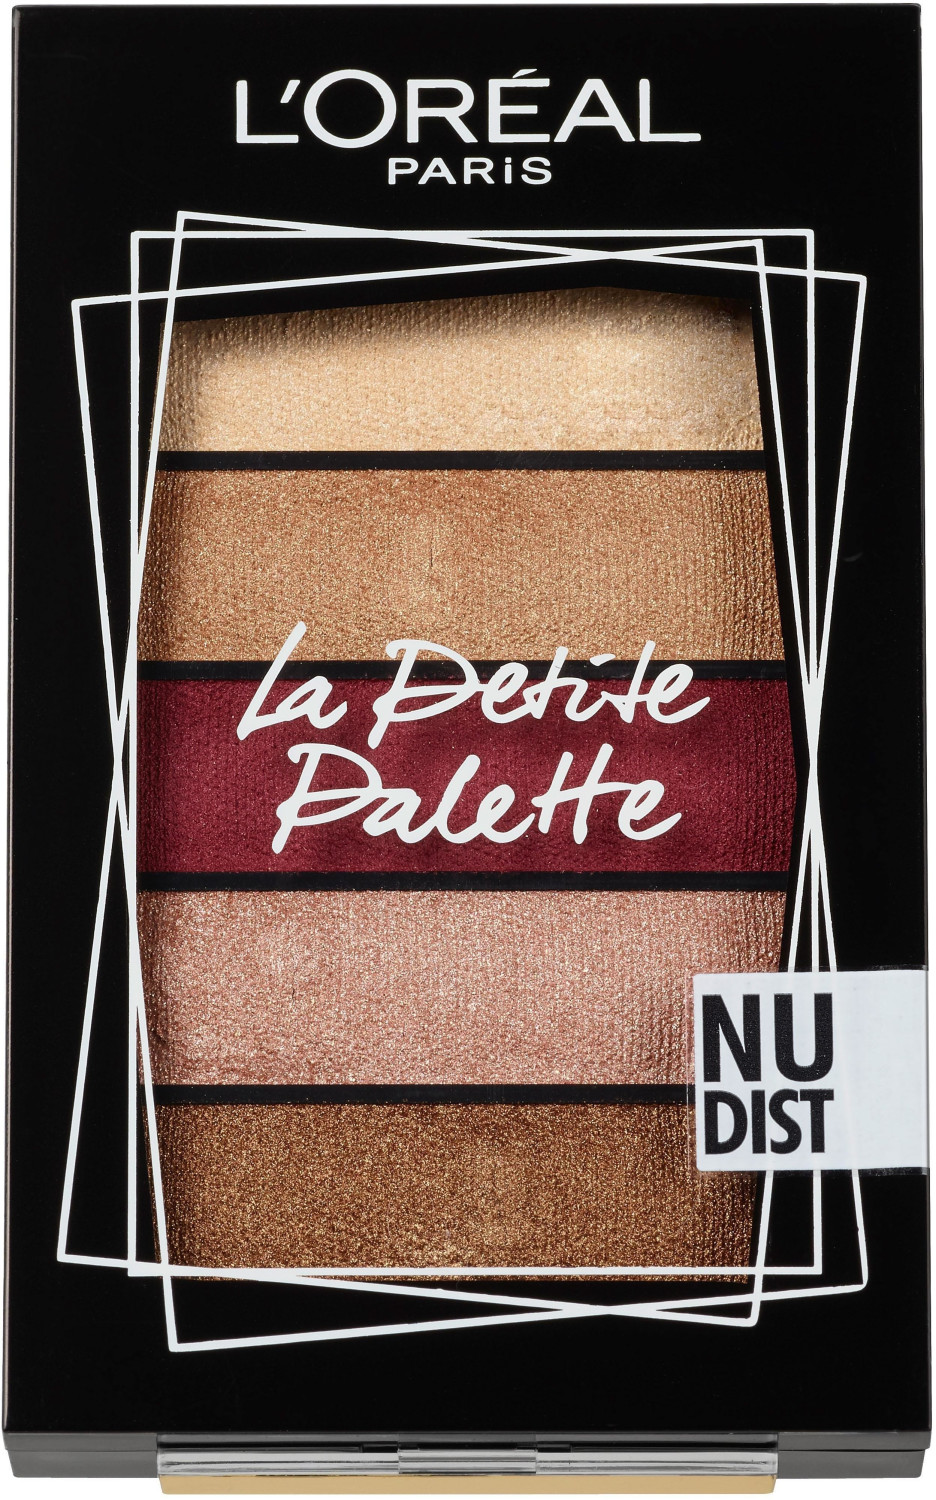 Photos - Eyeshadow LOreal L'Oréal La Petite Palette 02 Nudist (4g) 